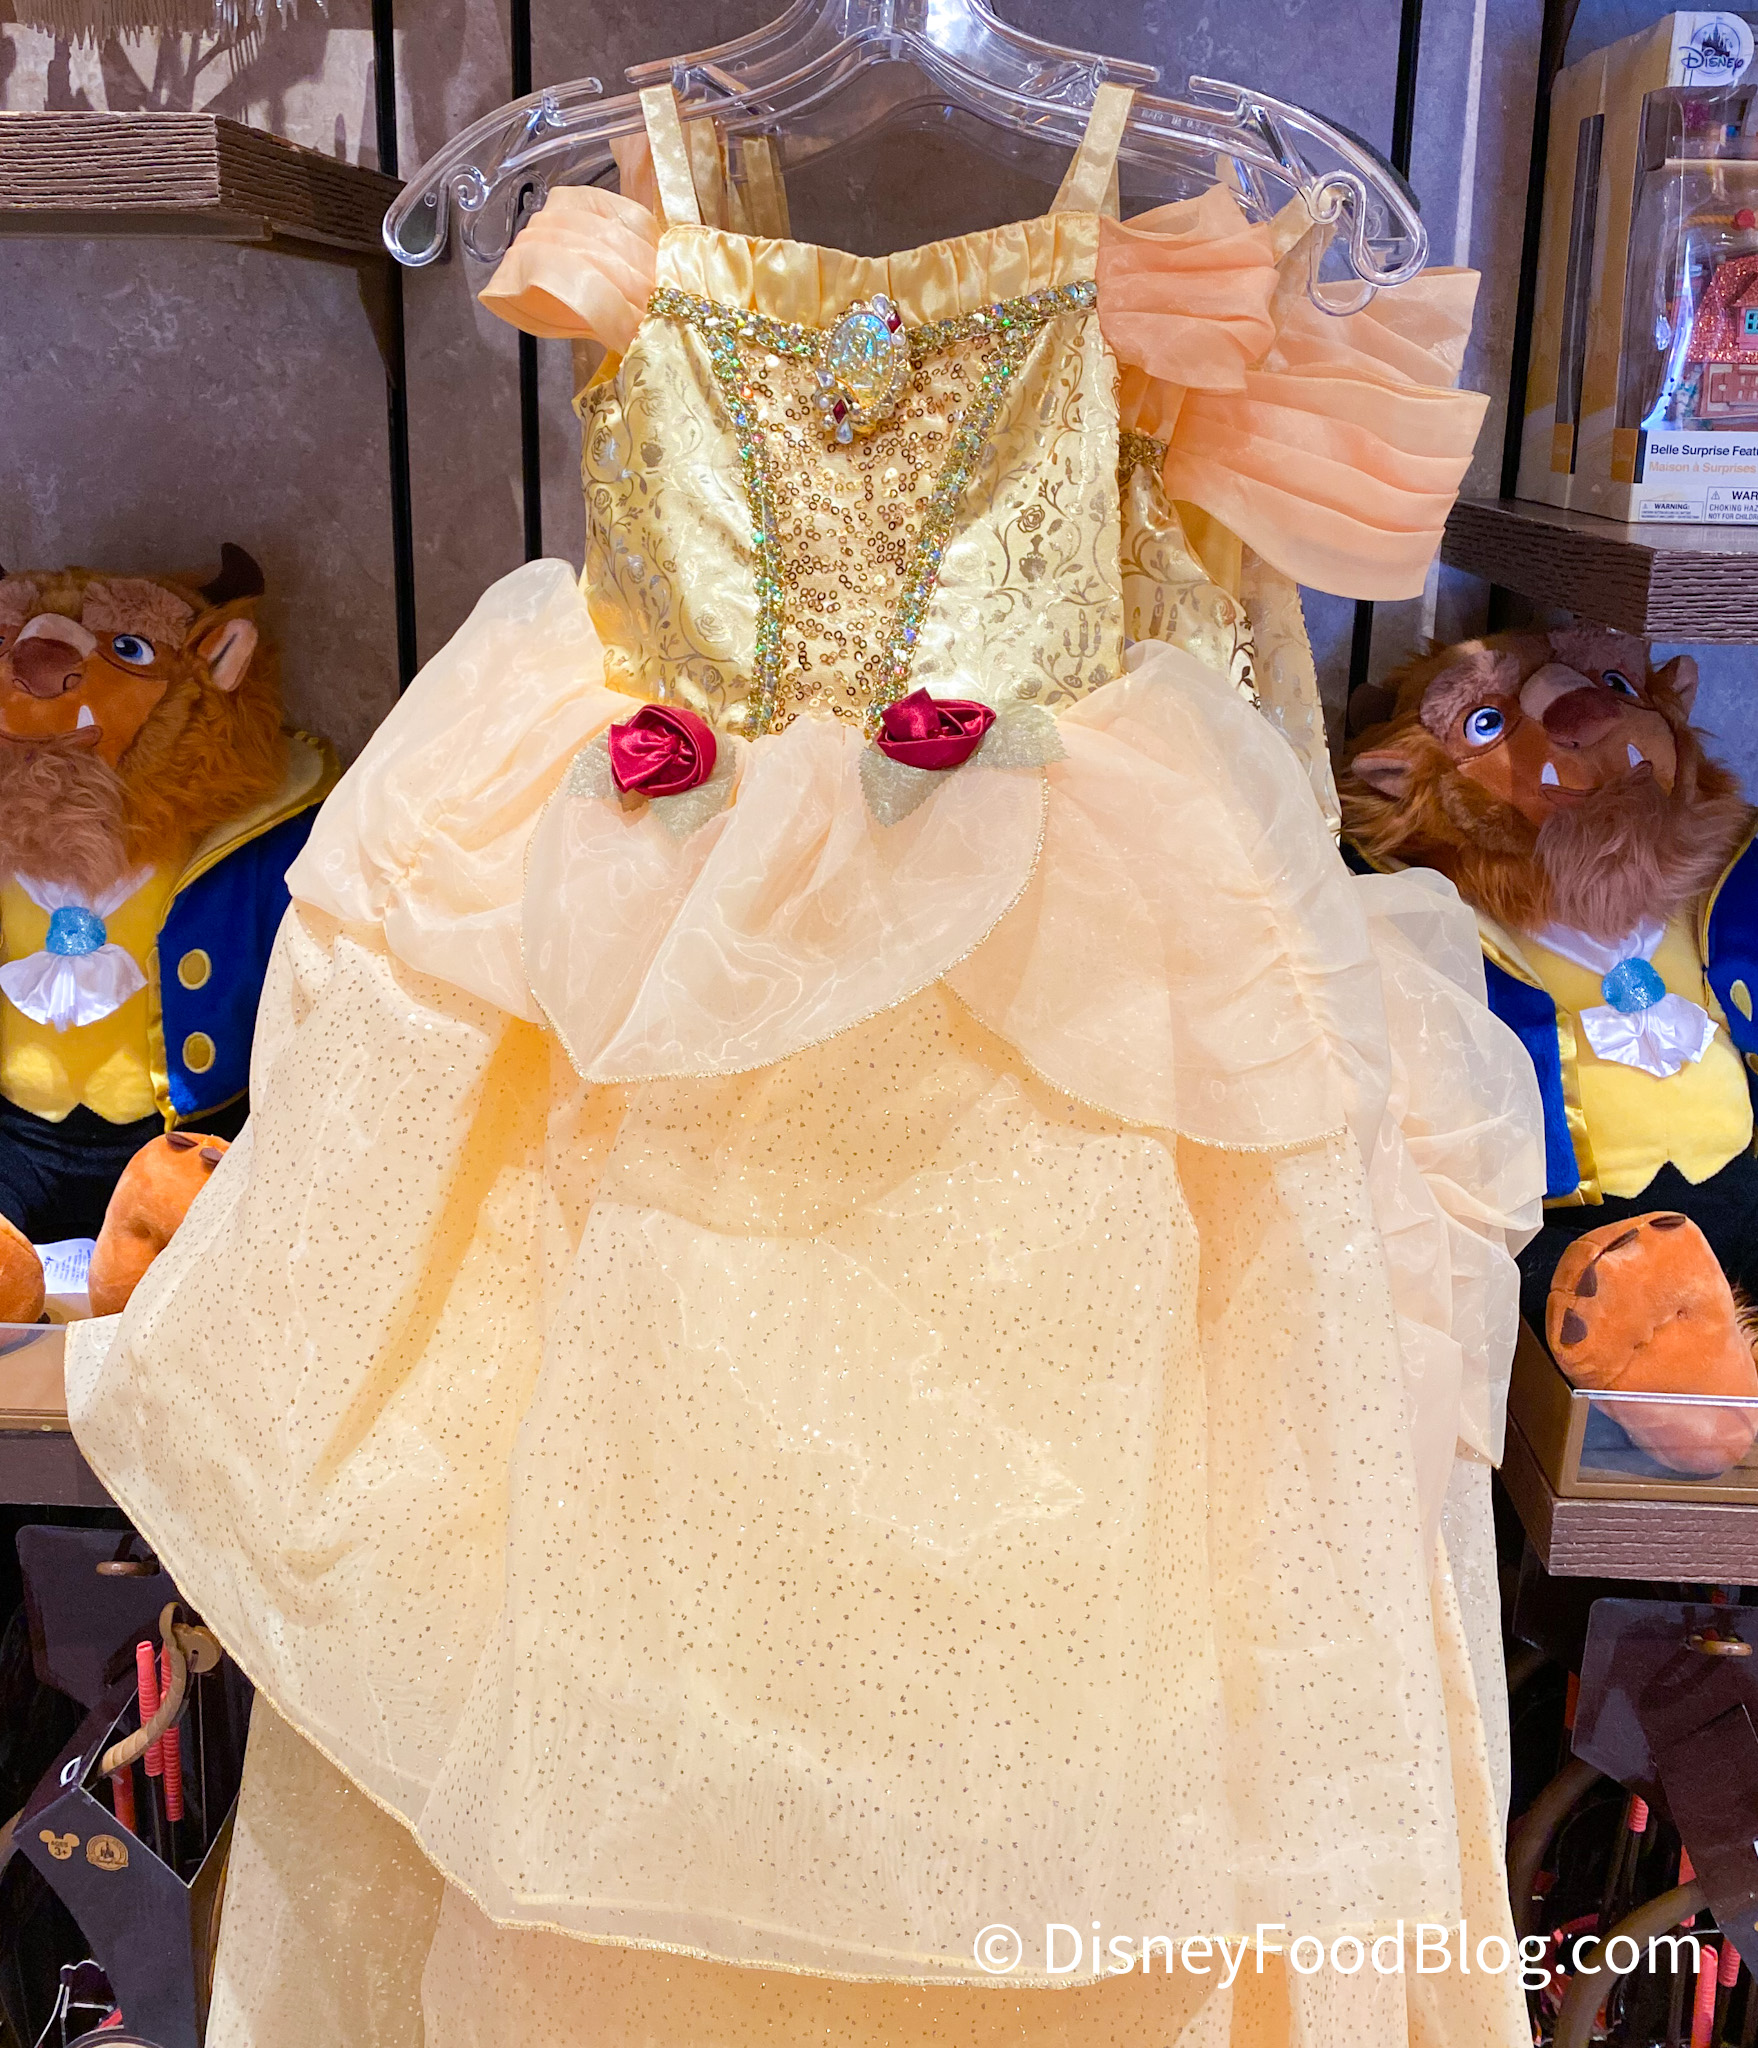 PHOTOS: NEW Princess Costume Dresses Arrive in Disney World!